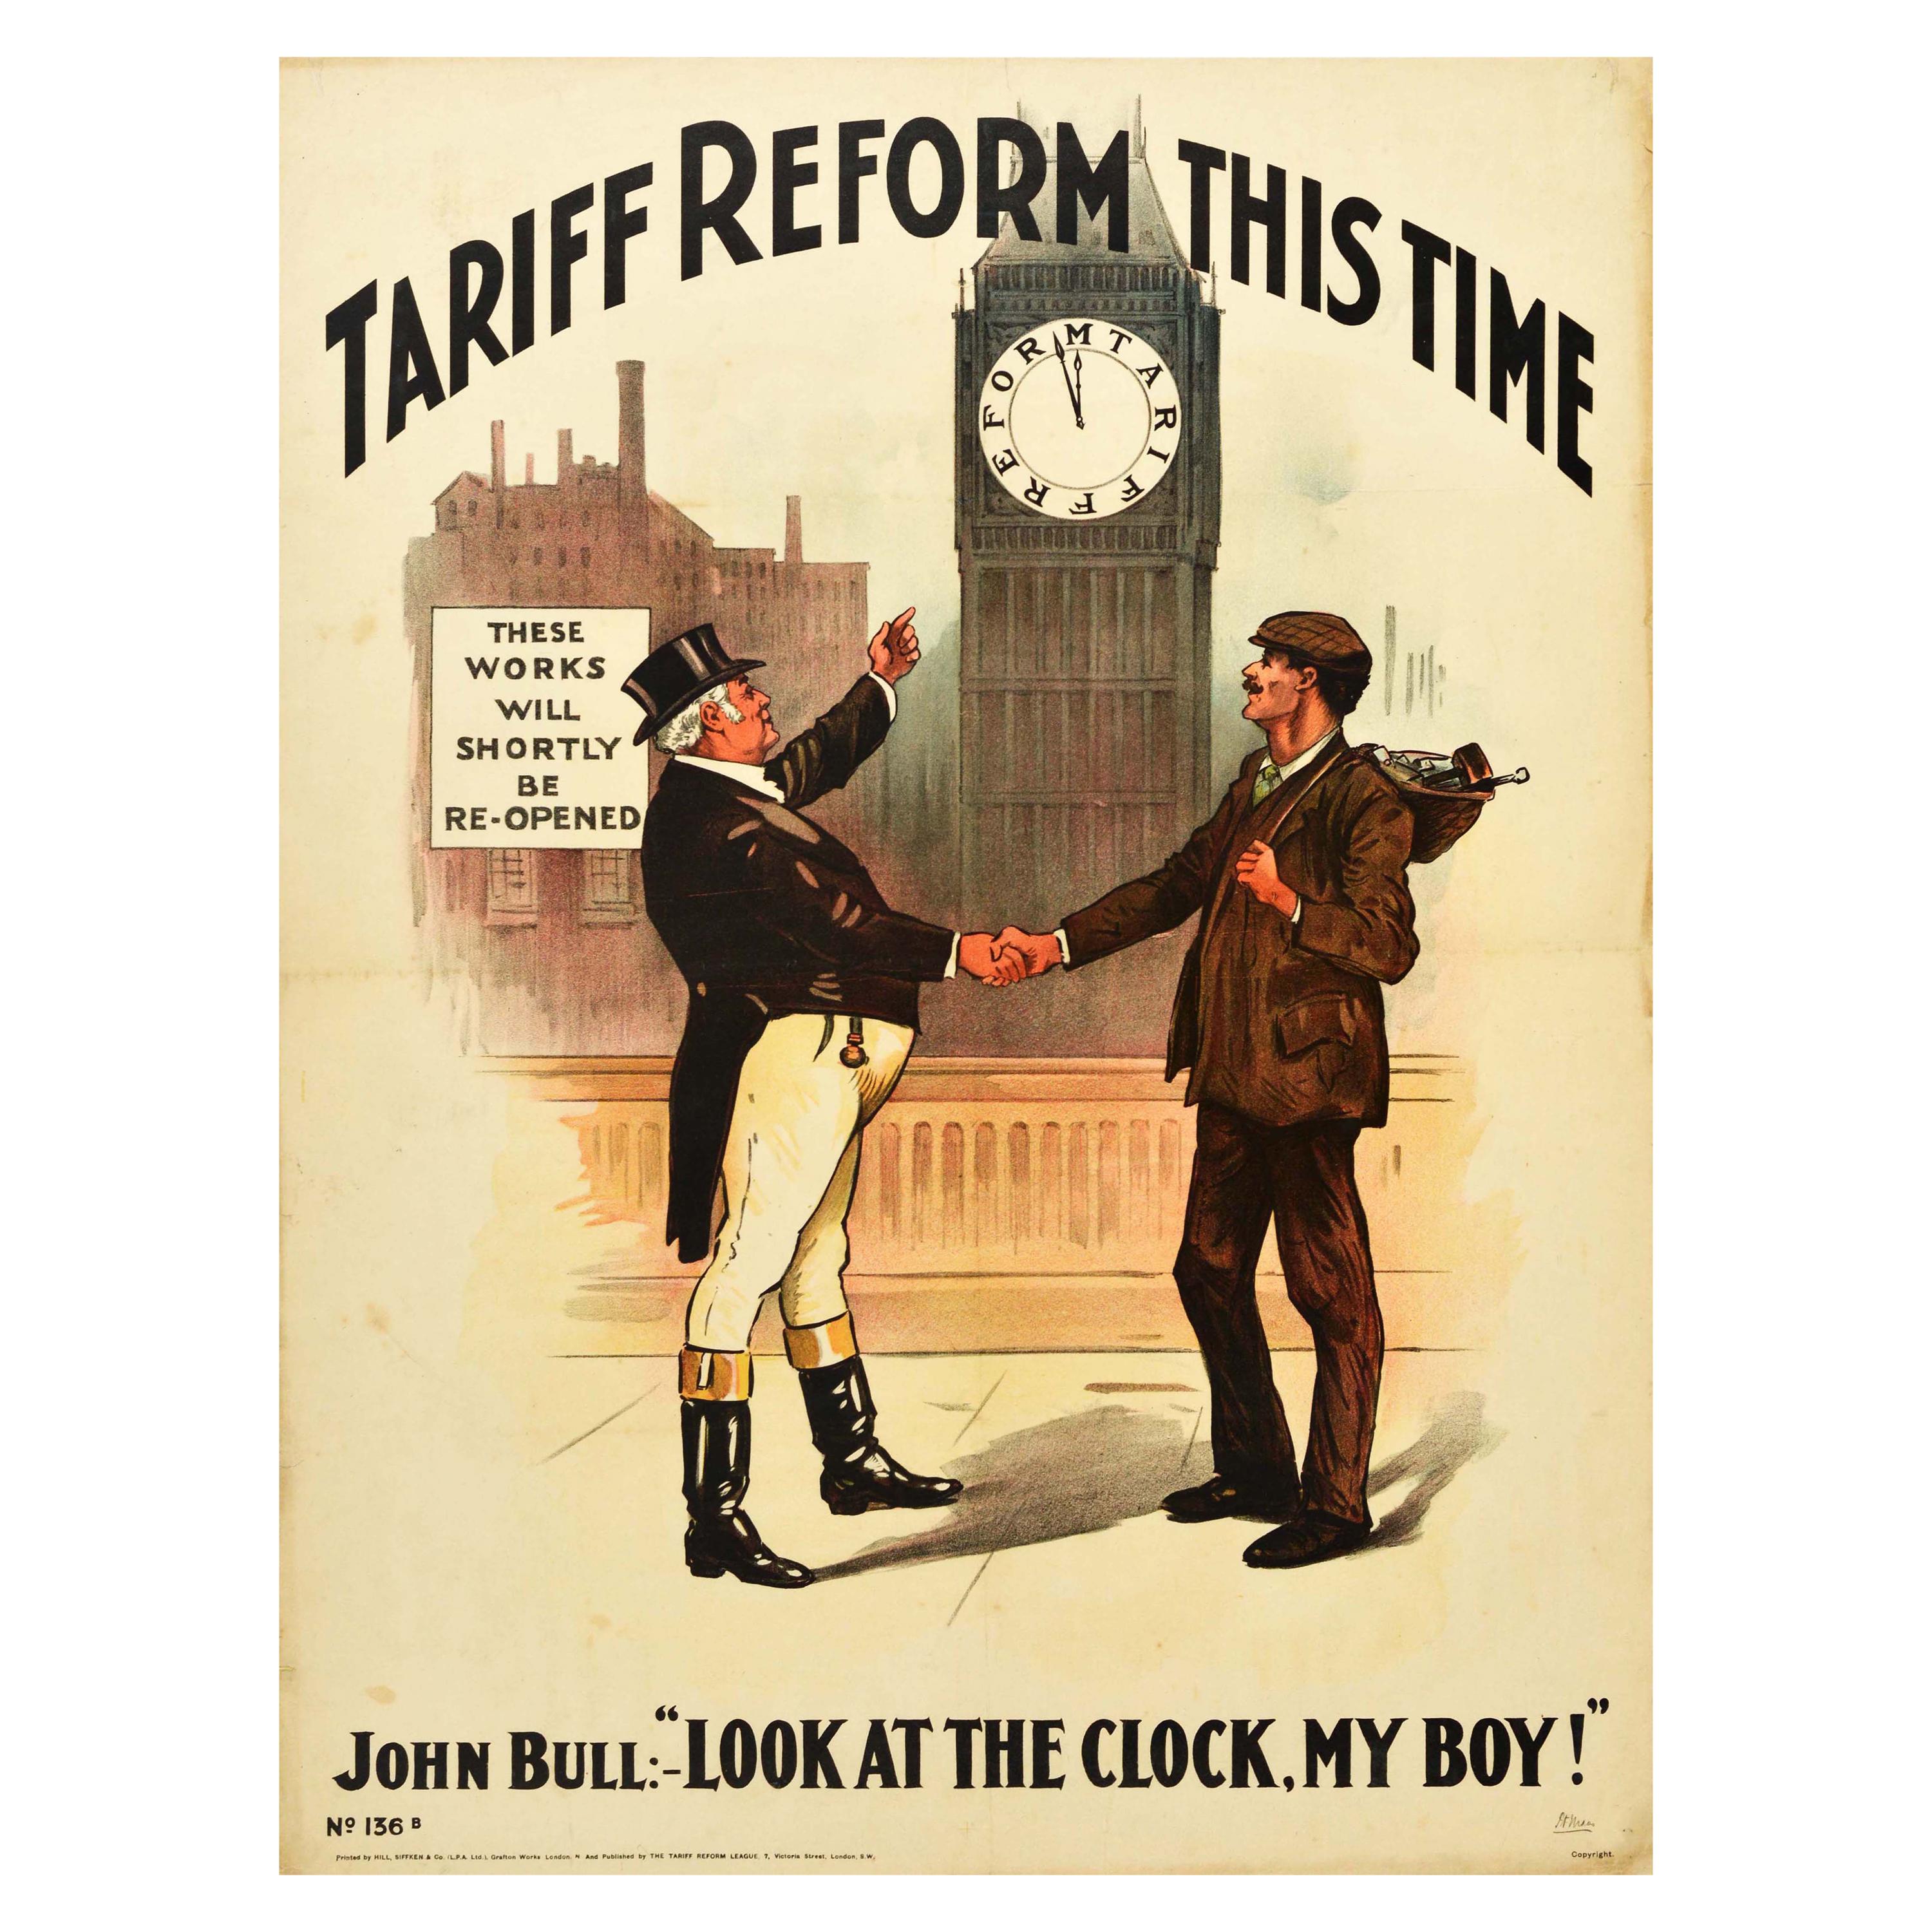 Original Antikes politisches Poster „This Time Clock“ Tarifreform, John Bull Design im Angebot